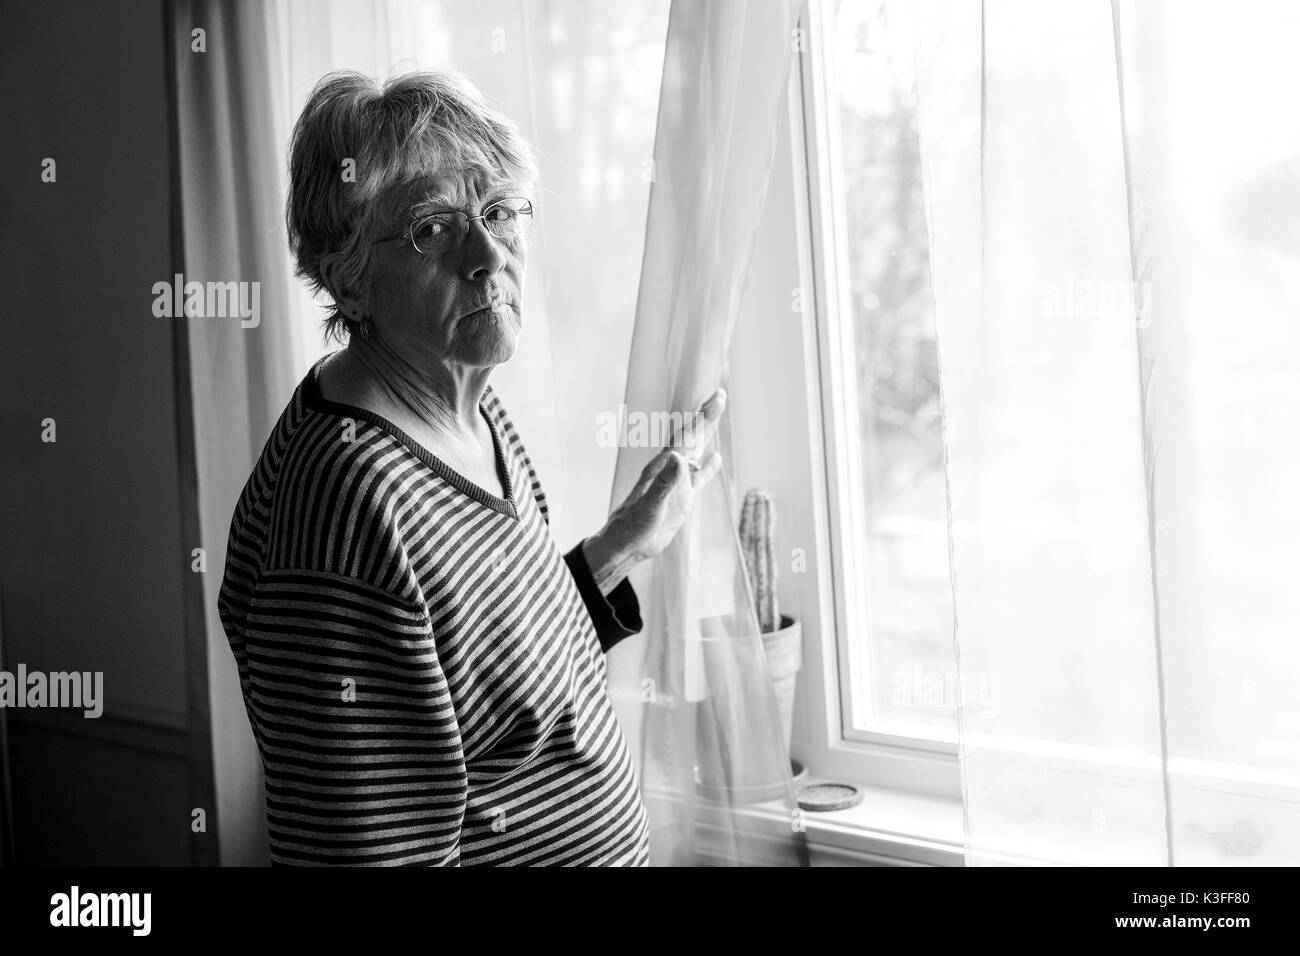 Elderly woman sad Black and White Stock Photos & Images - Alamy